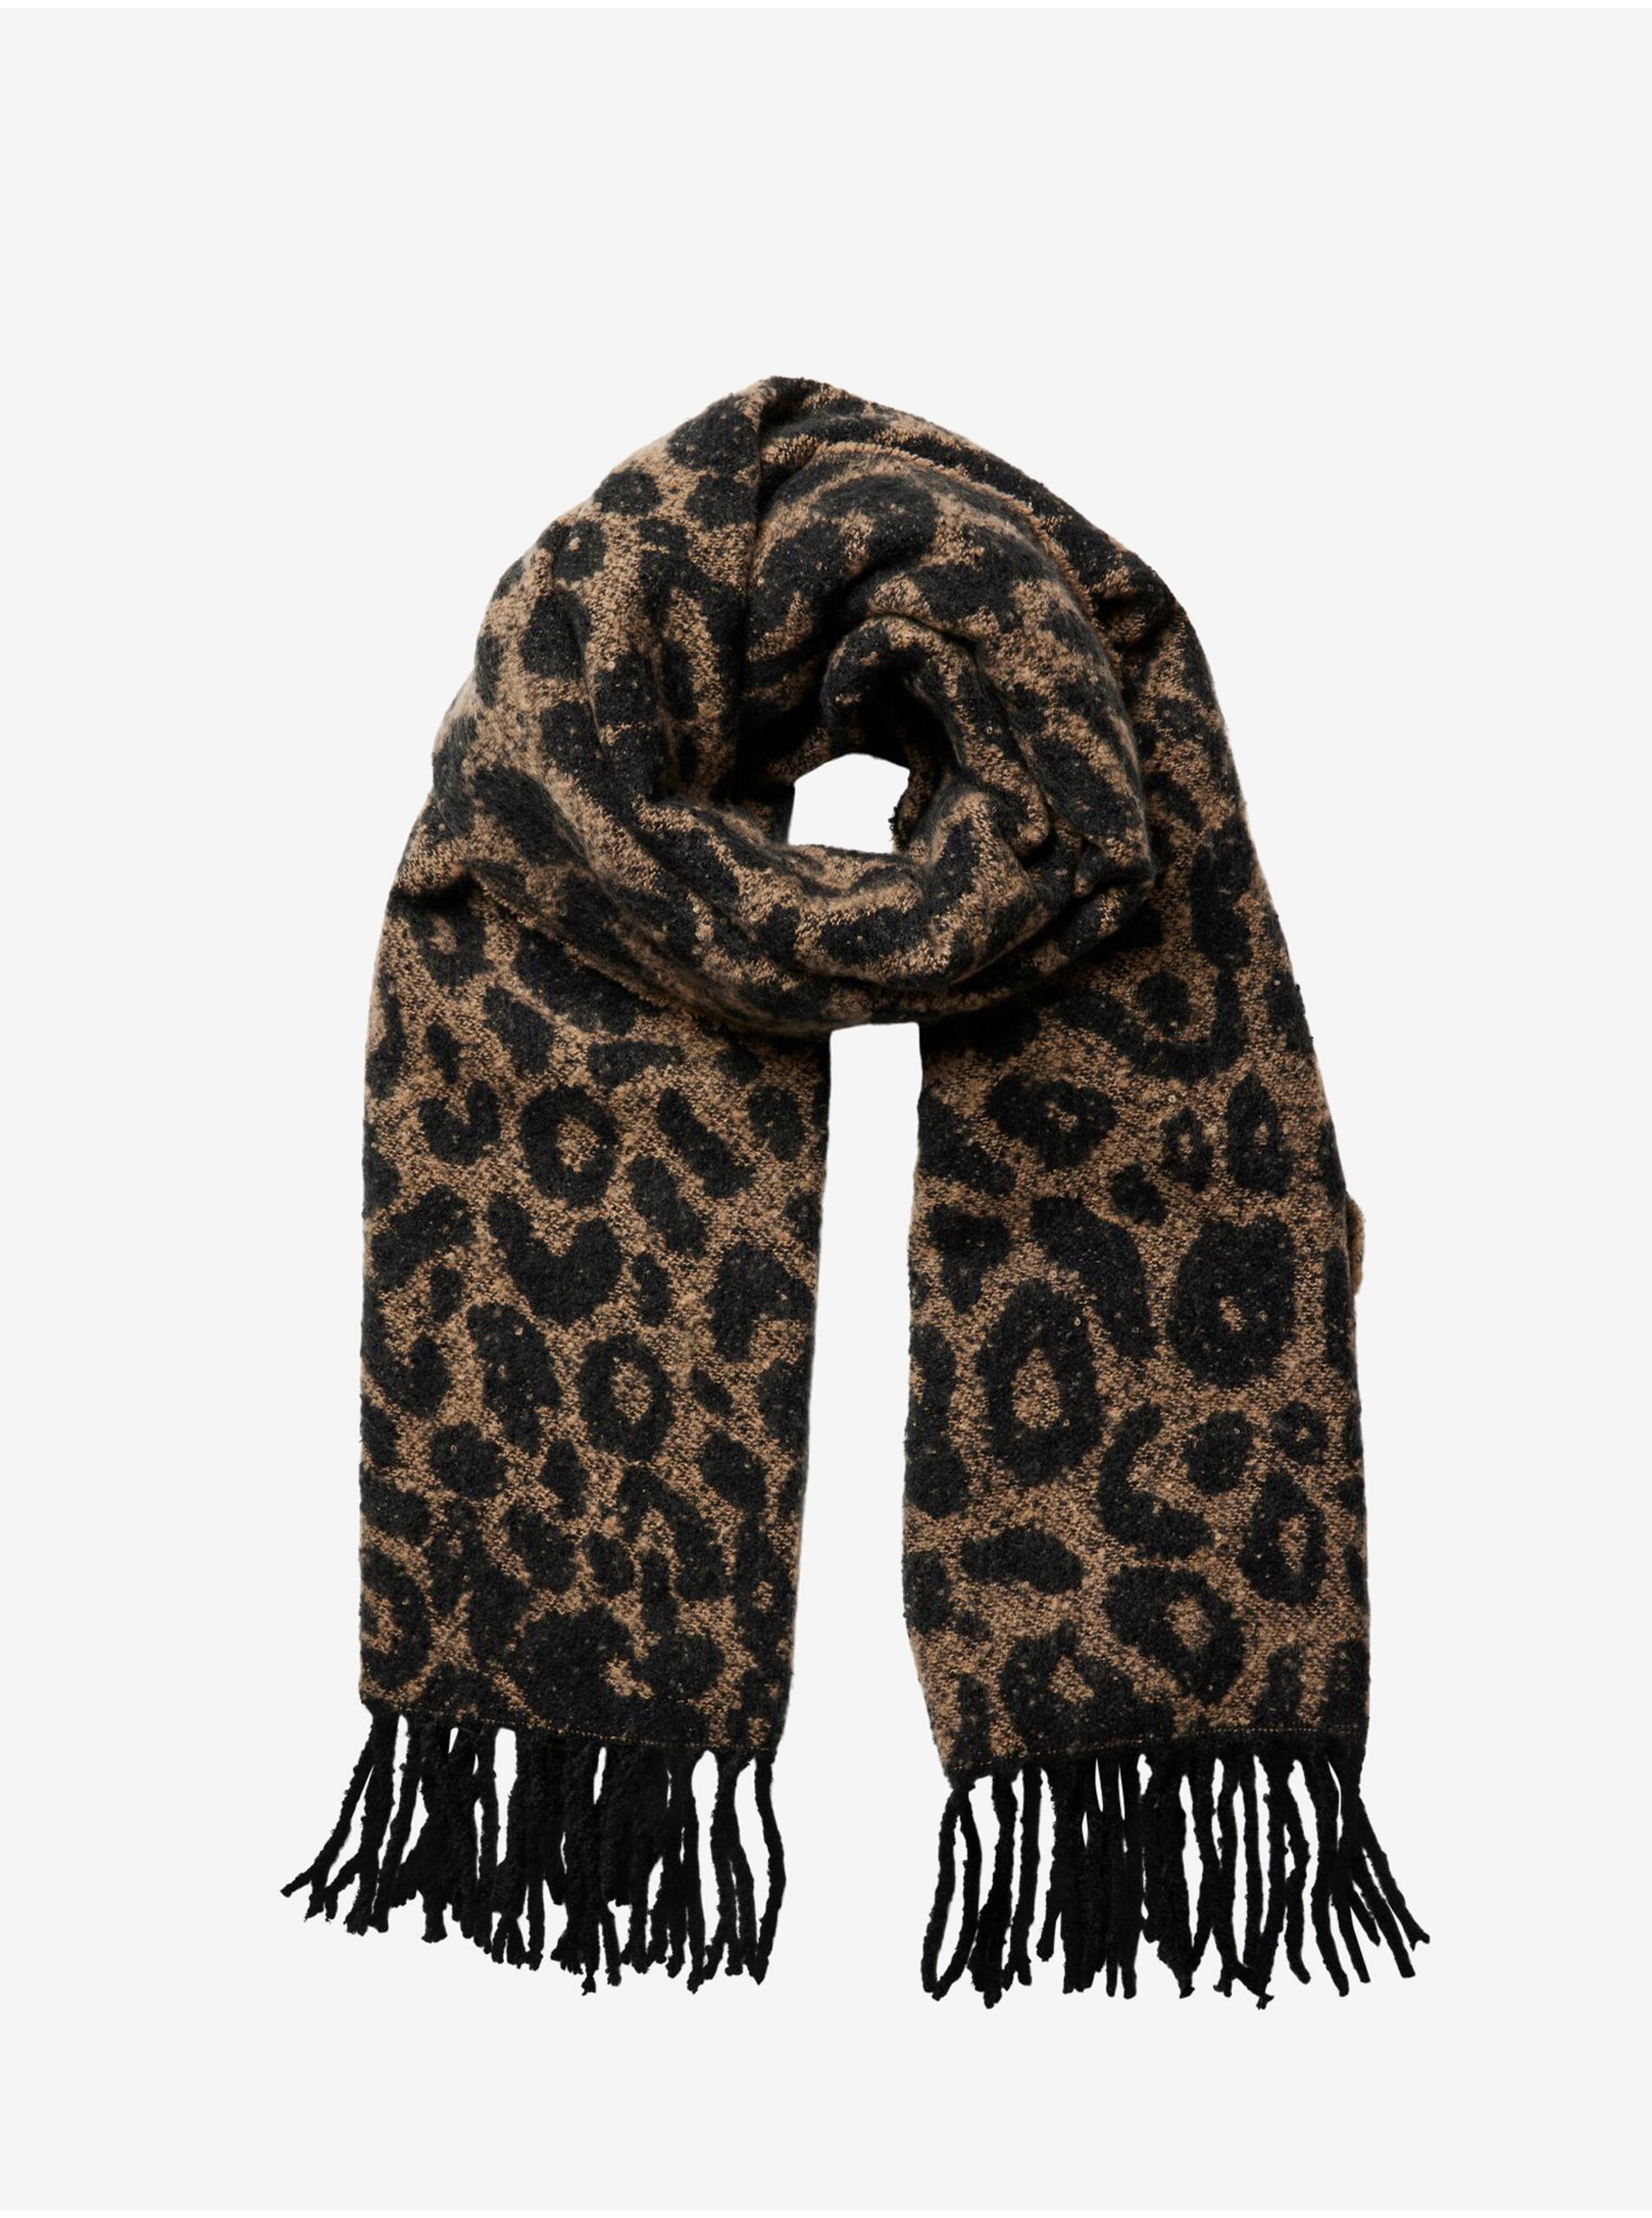 Black-brown women's scarf with animal pattern Pieces Pyron - Women